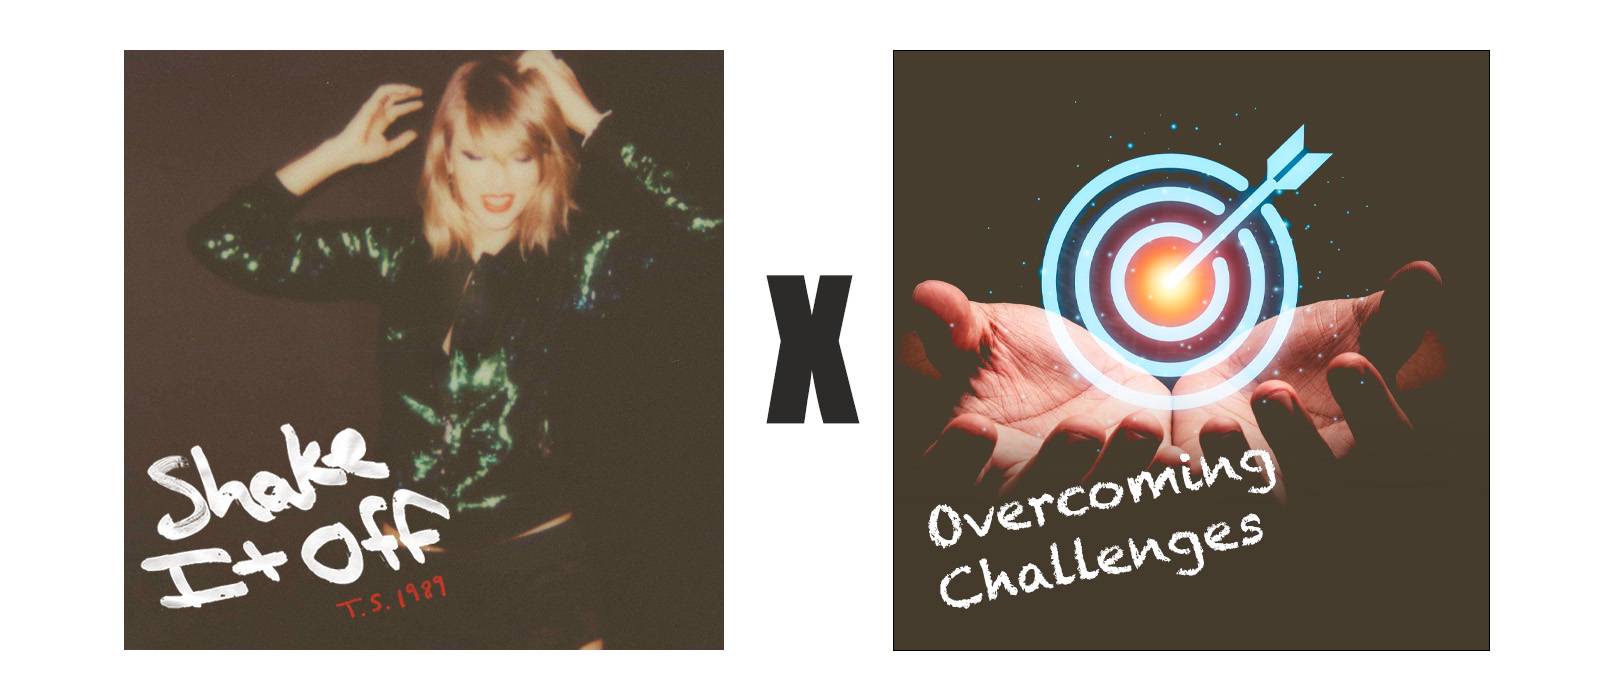 Taylor Swift Shake It Off x Superando desafíos